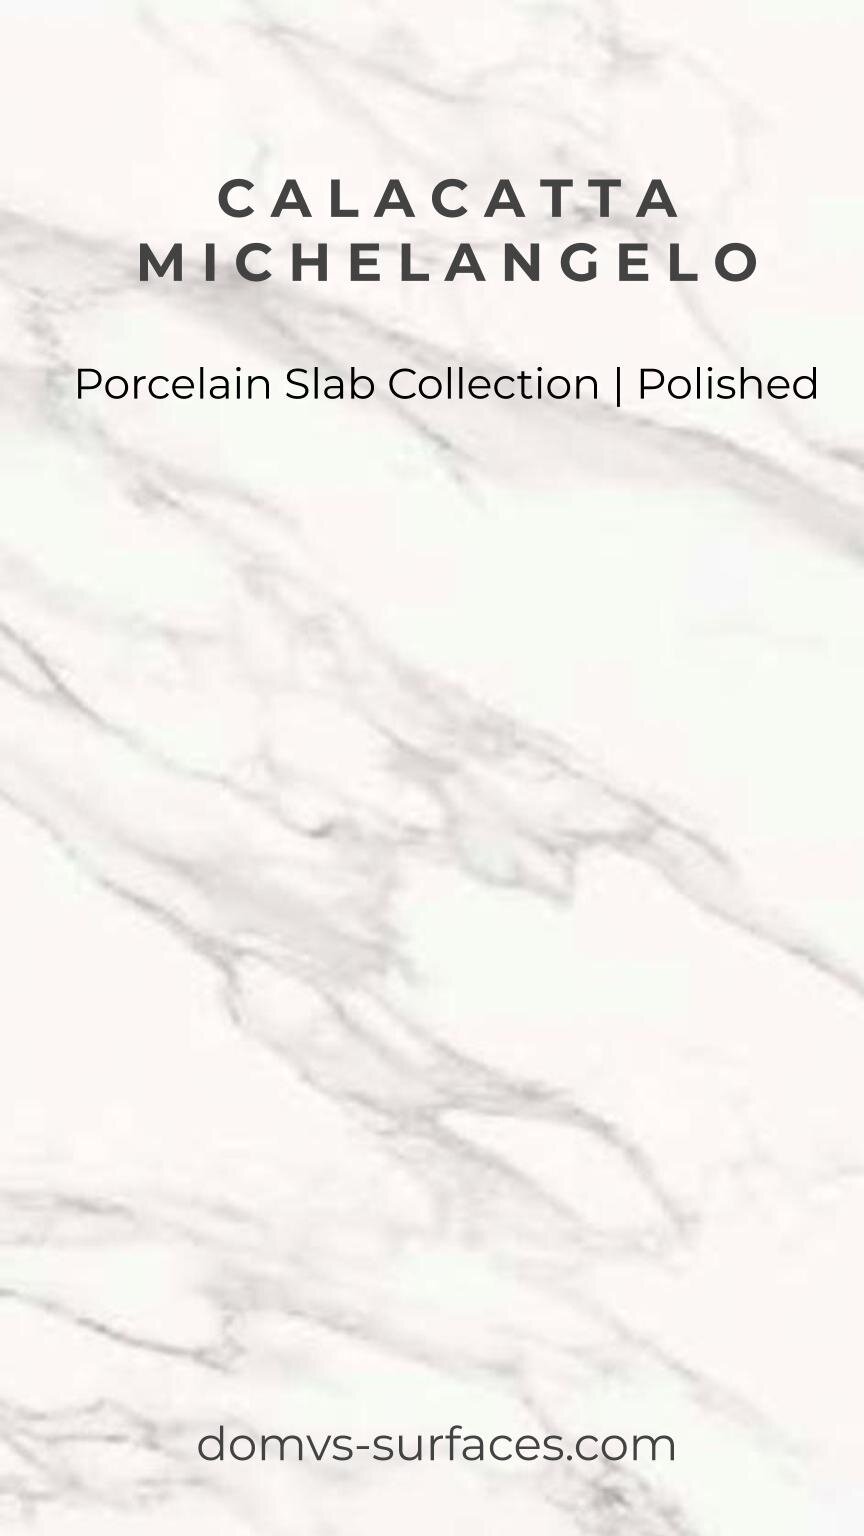 IGS Porcelain Slab Calacatta Michelangelo.jpg